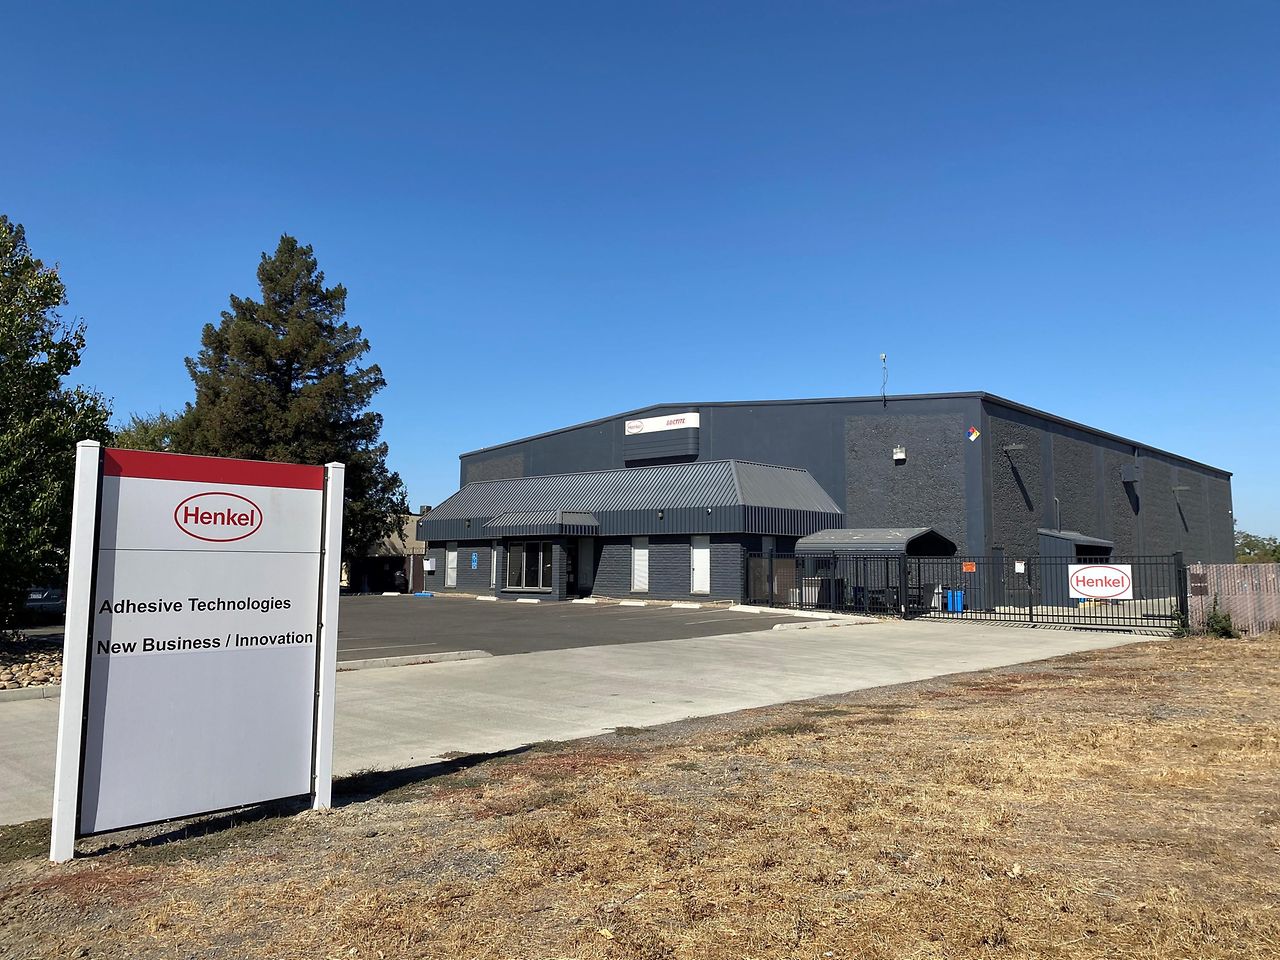 Henkel’s Dixon facility in California, USA